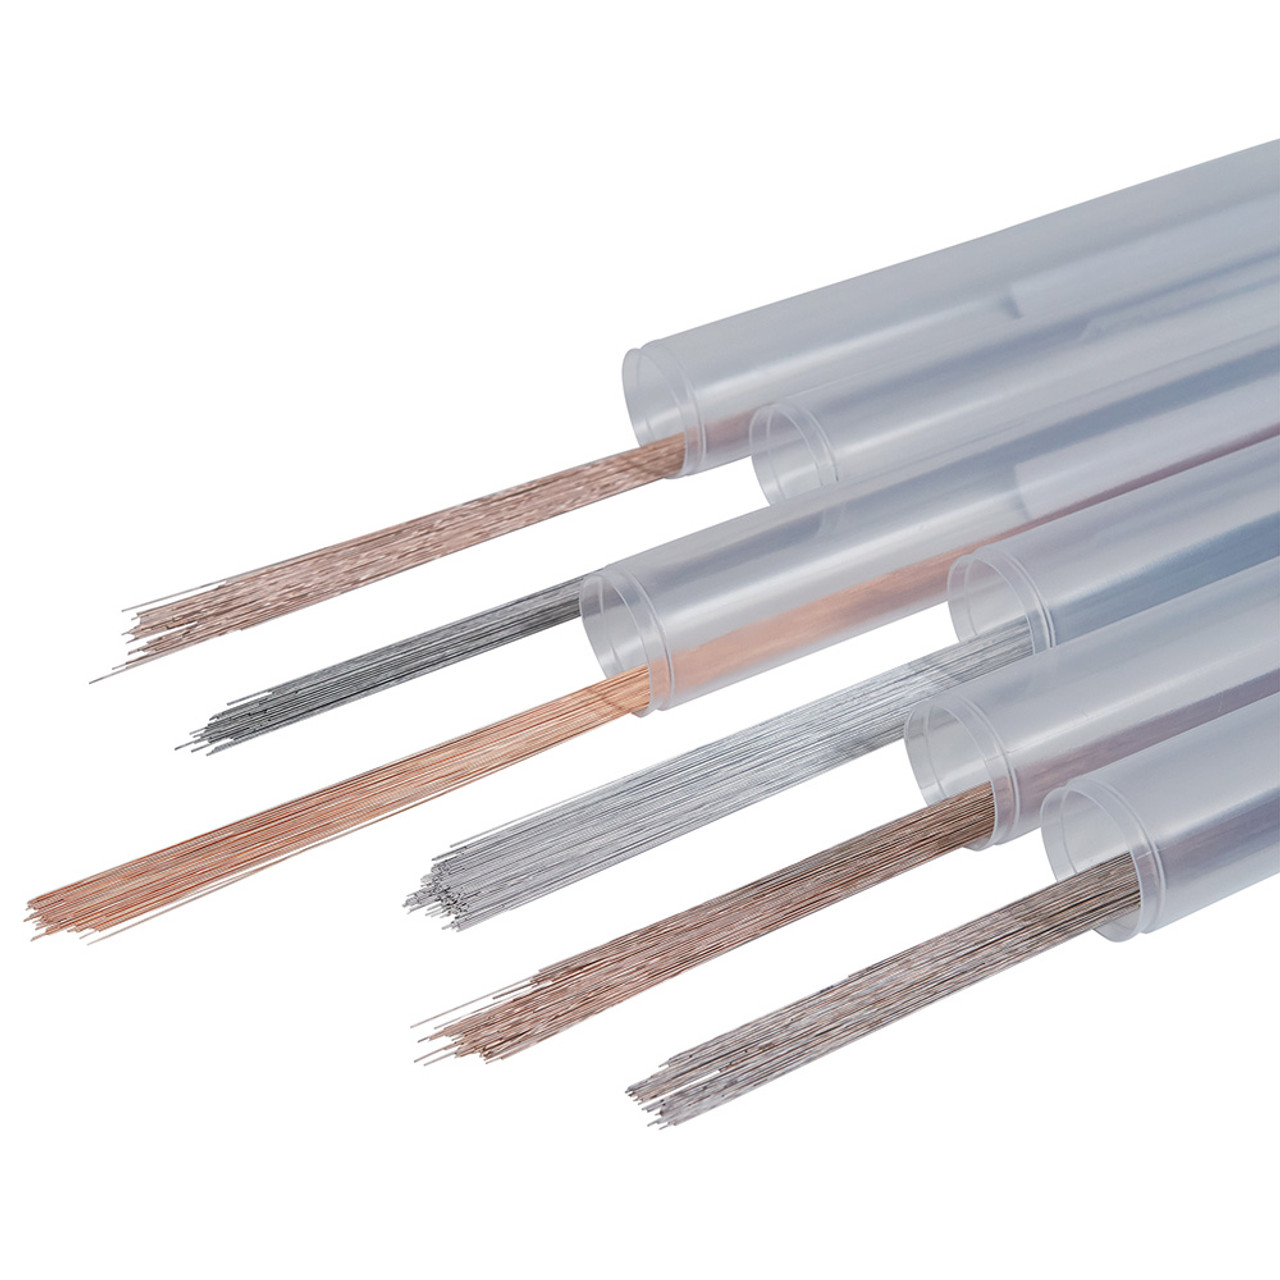 Laser Welding Wires - P-20, 0.6mm pkg. of 25 grams = approx. 36 wires